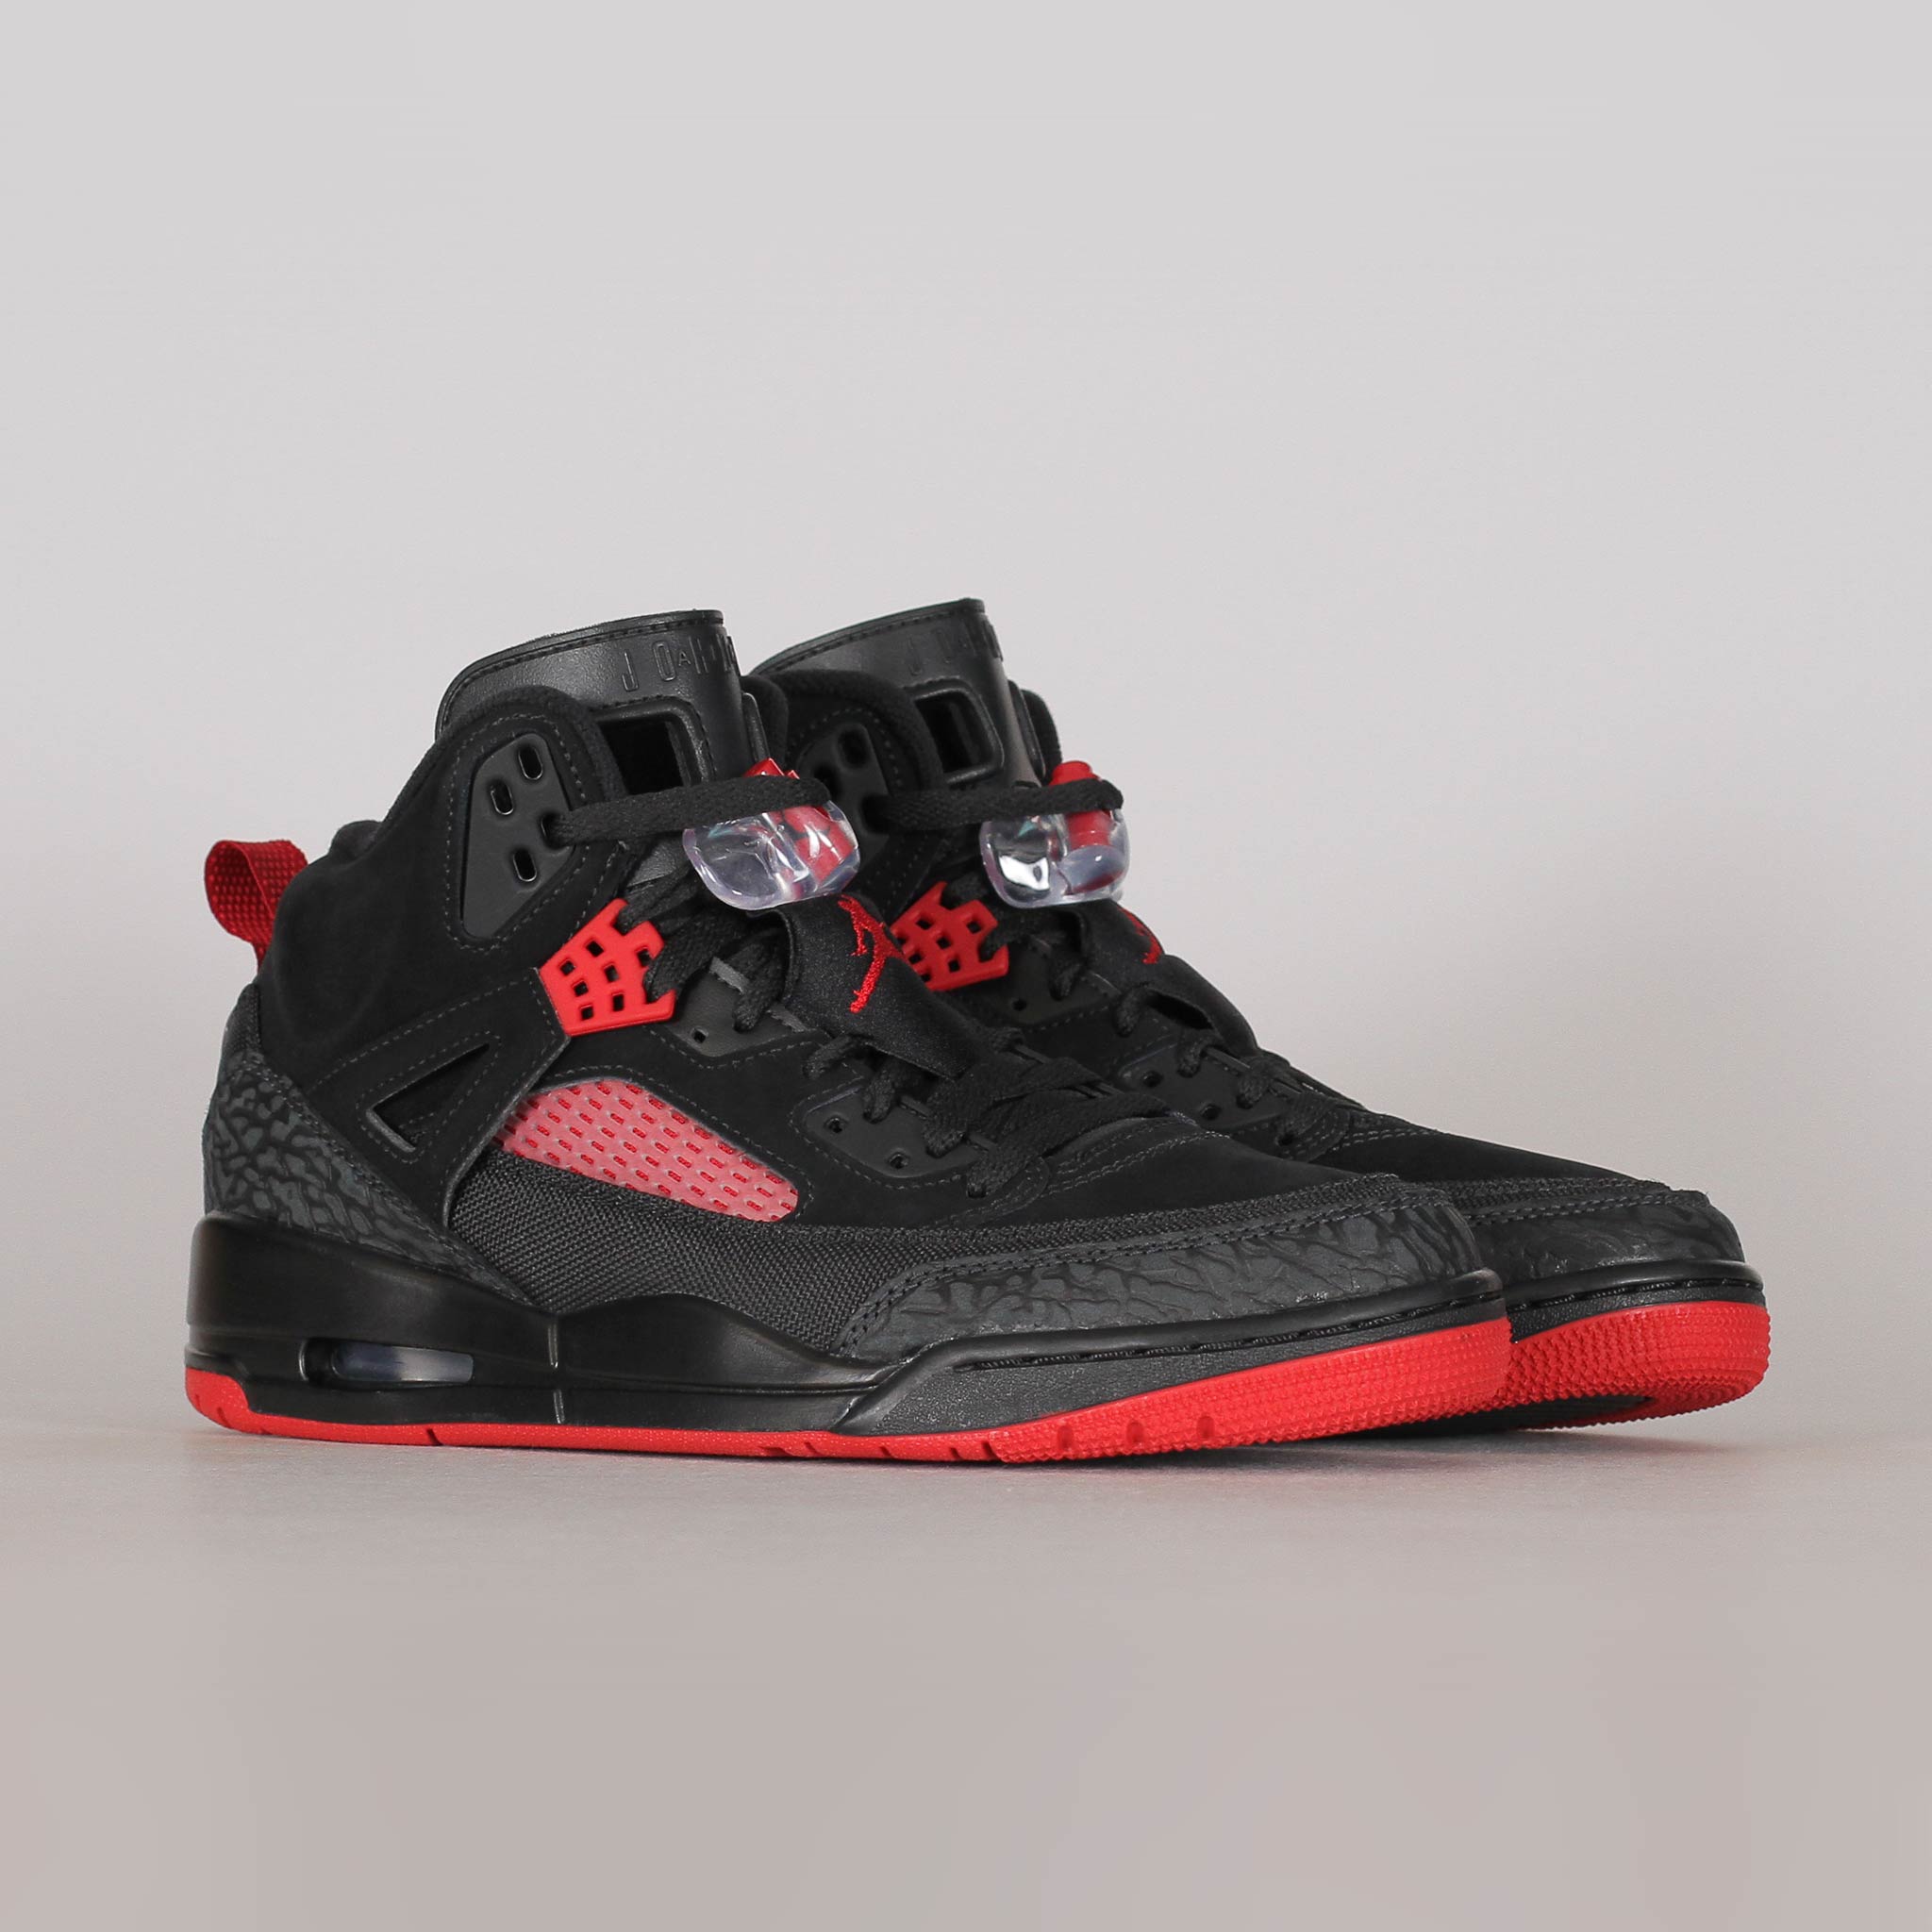 Shelta - Nike Air Jordan Spizike Black Gym Red (315371-006)